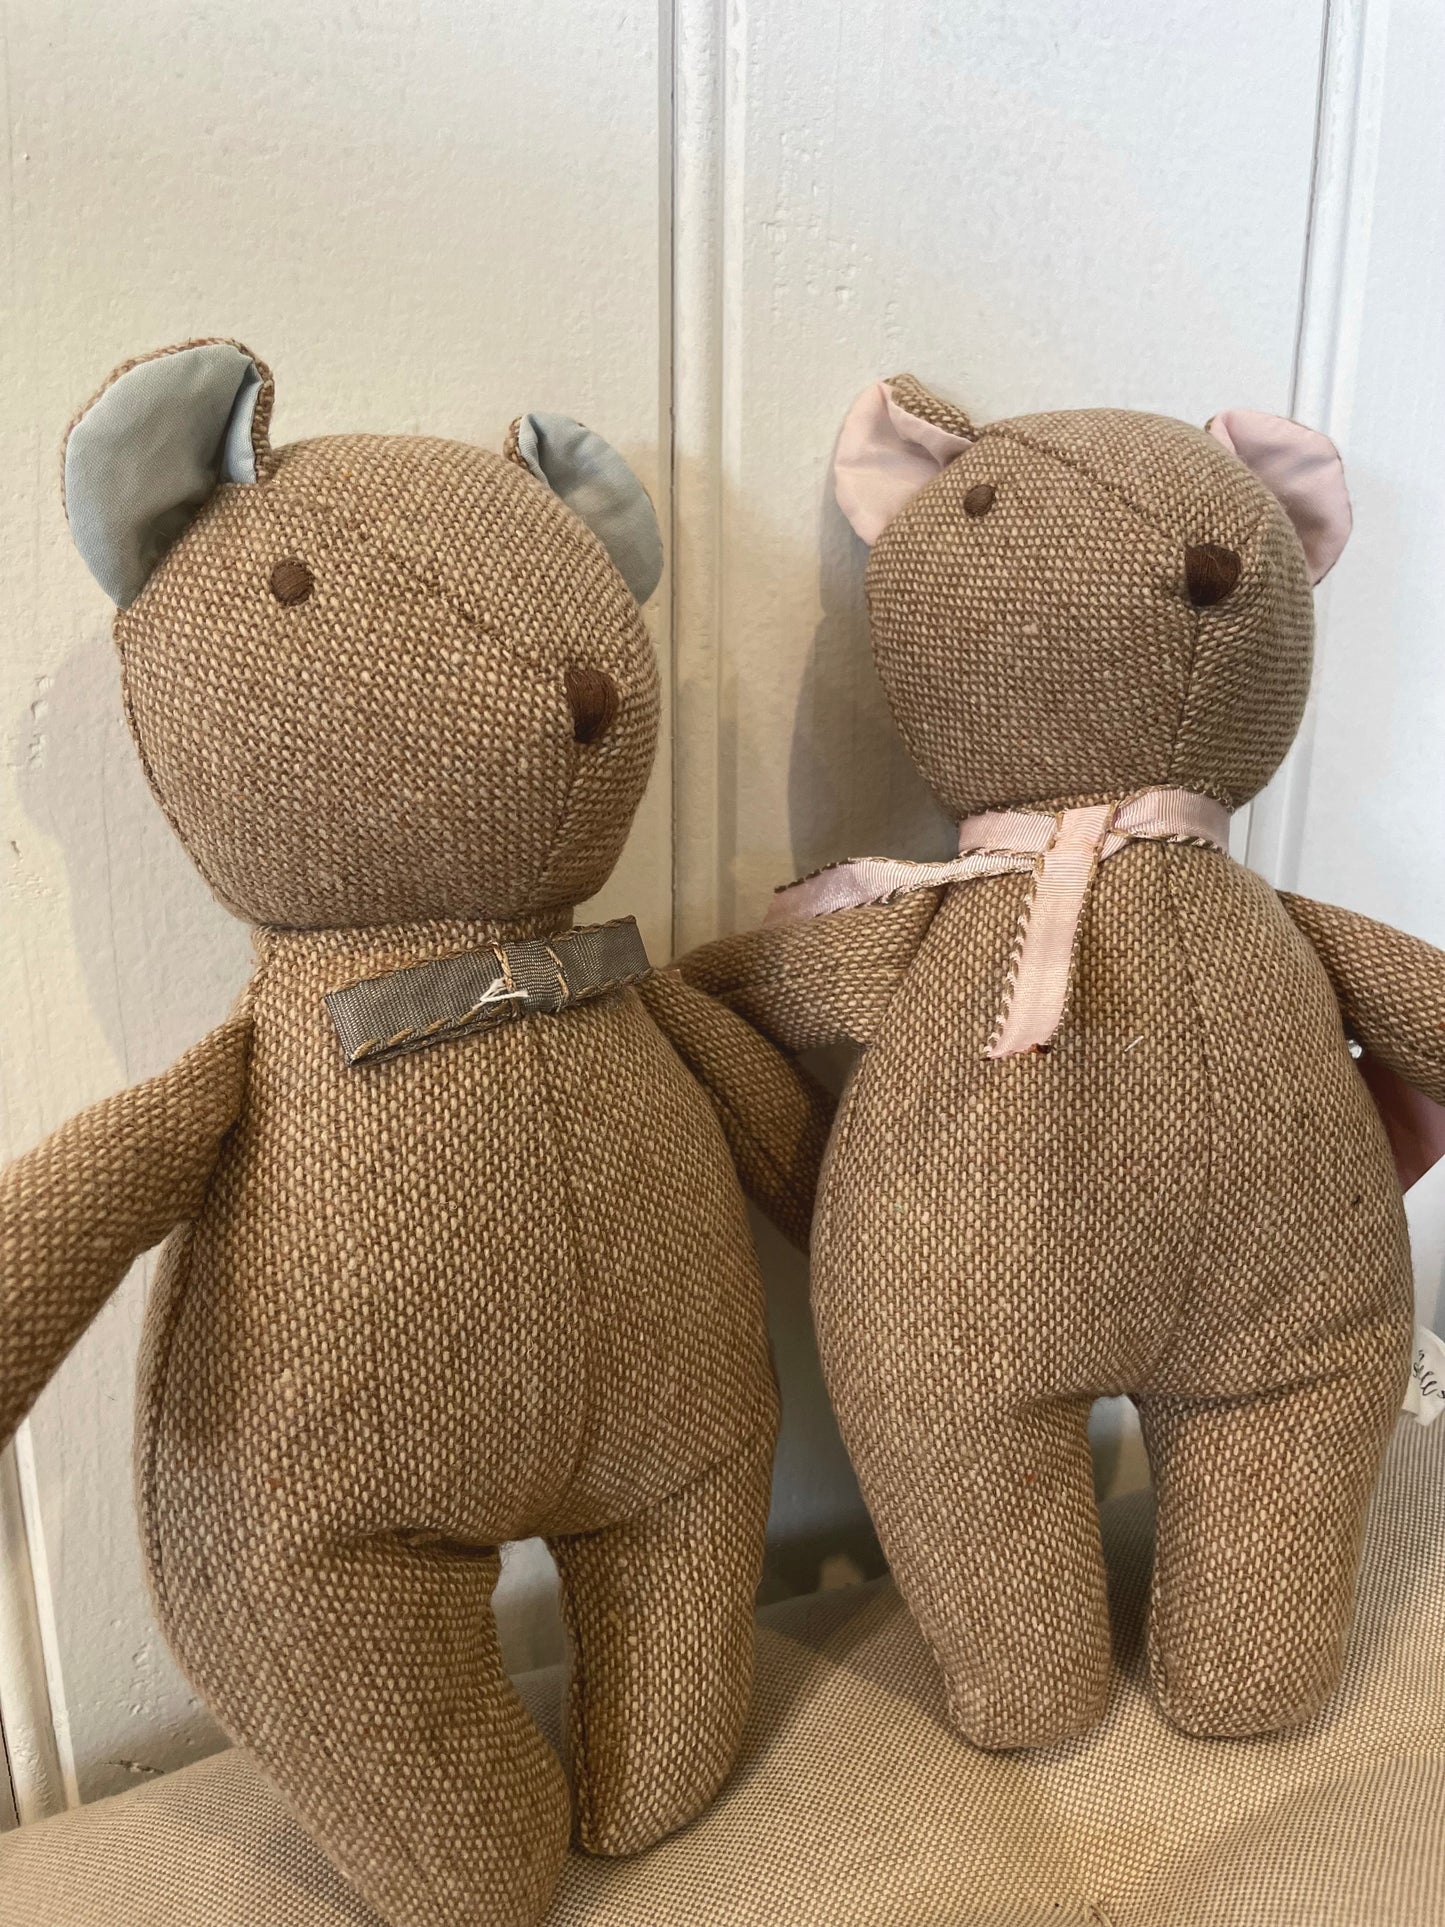 Tweed Bear Toys. Rupert and Penelope.